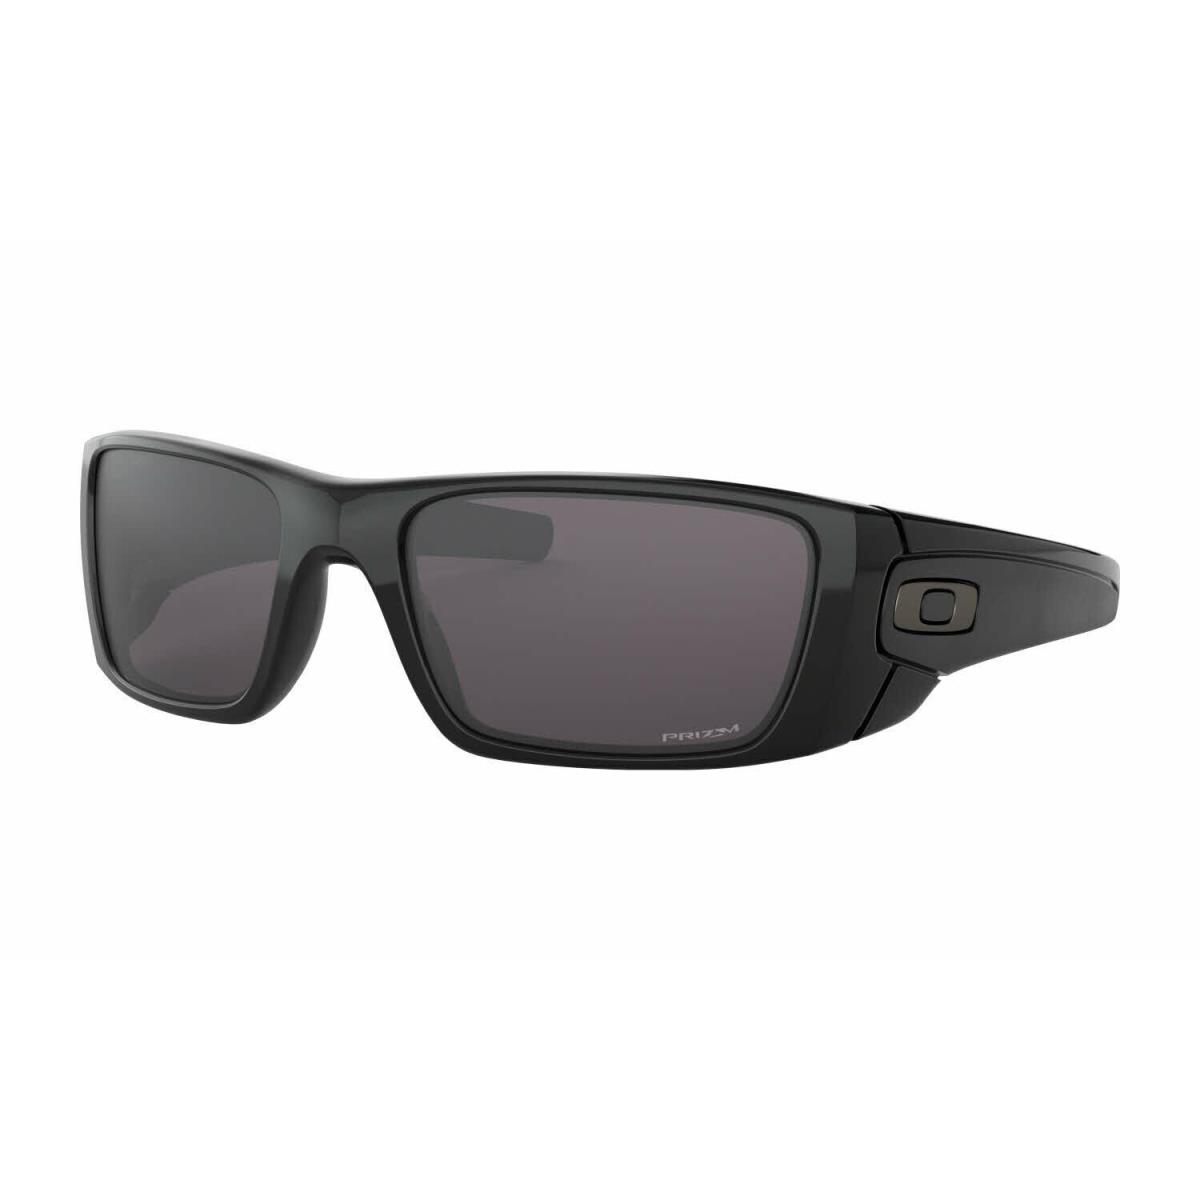 Oakley Fuel Cell Prizm Polished Black Frame Sunglasses OO9096-J5 60